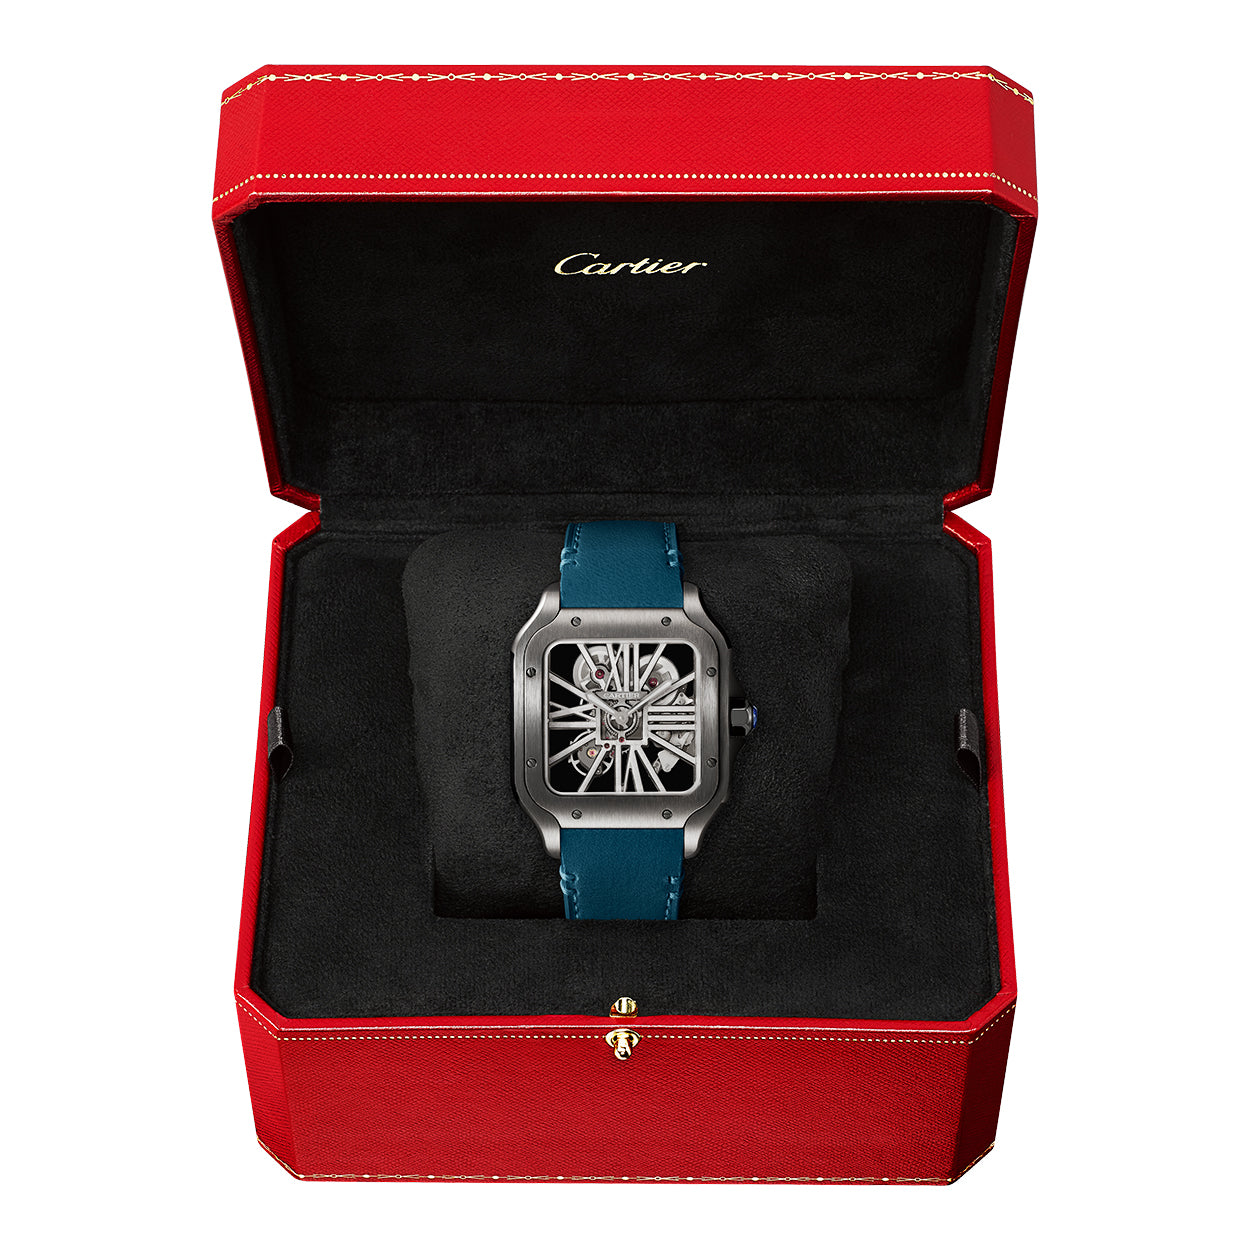 Santos de Cartier Large Skeleton Black ADLC Blue Strap Watch